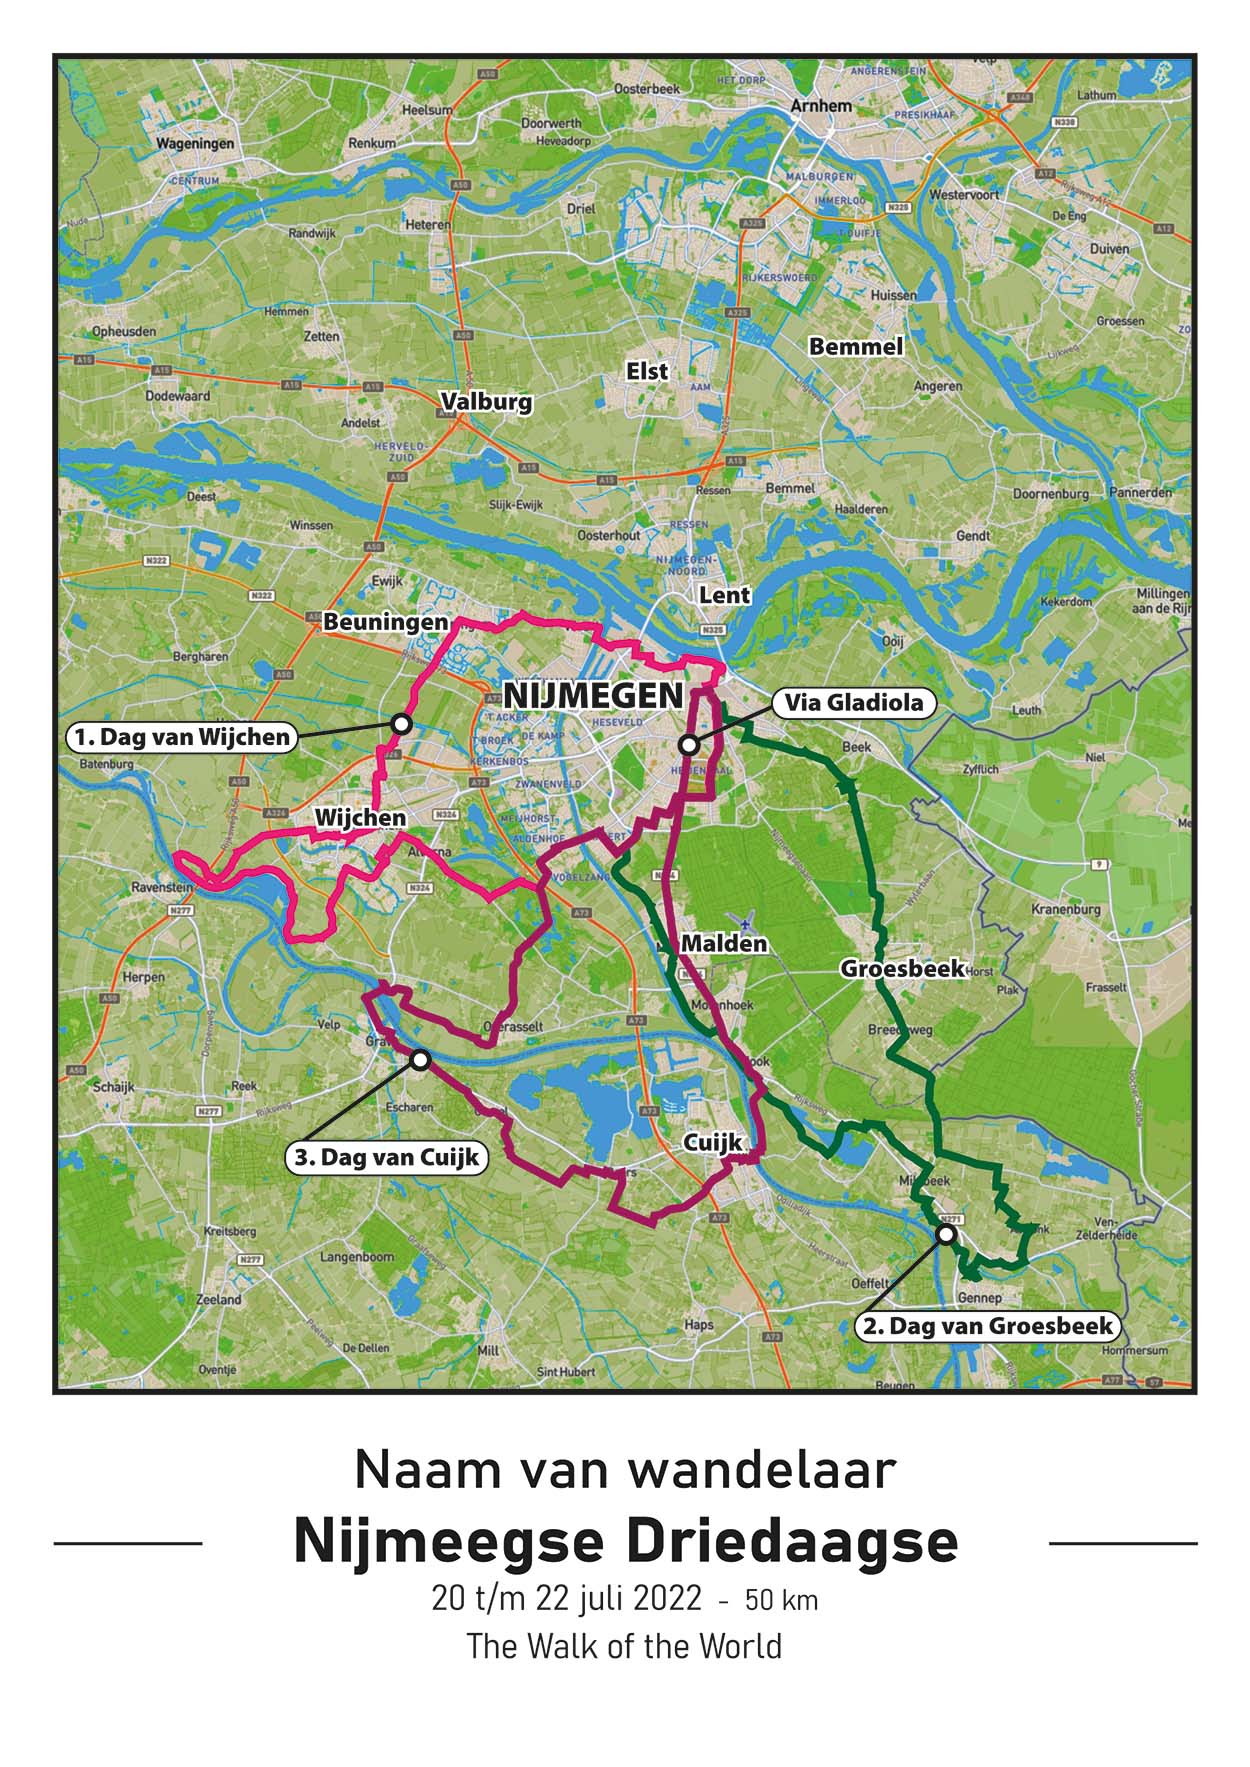 Nijmeegse Driedaagse, 50km, 2022